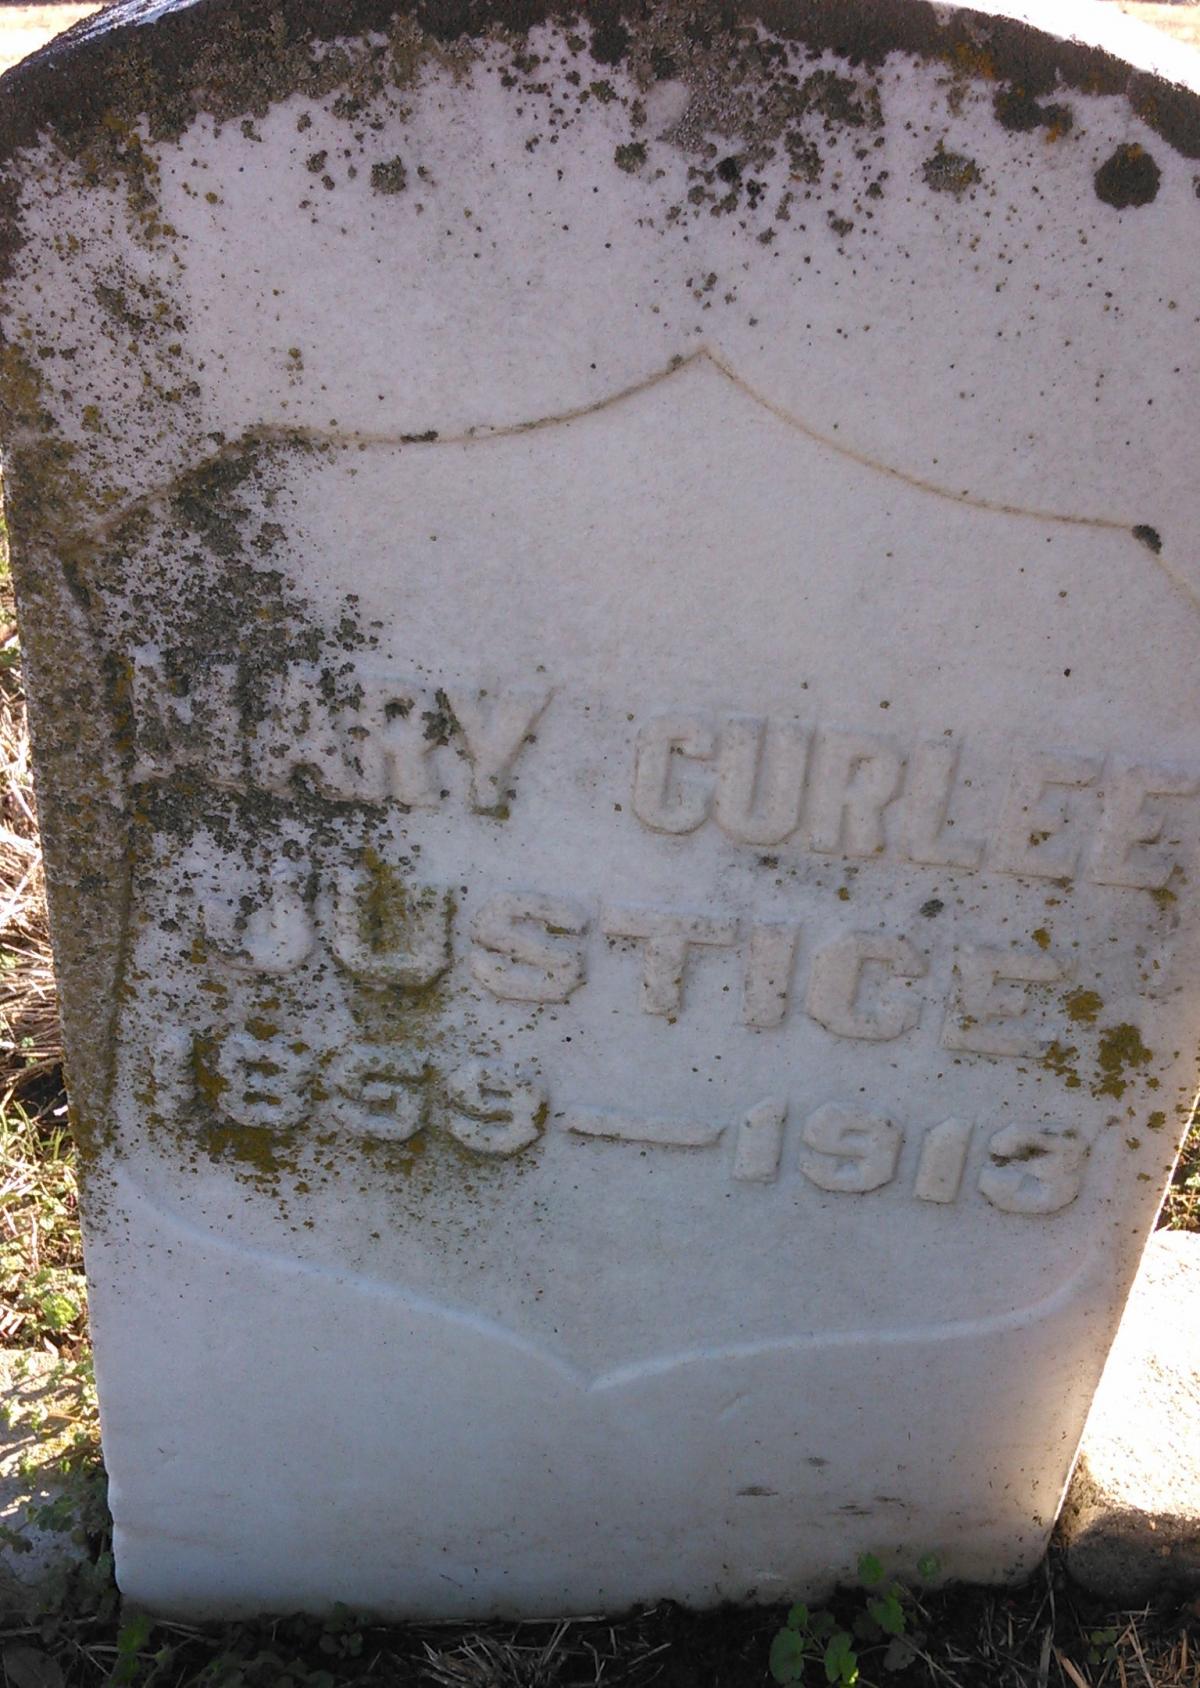 OK, Grove, Buzzard Cemetery, Justice, Mary Curlee Headstone